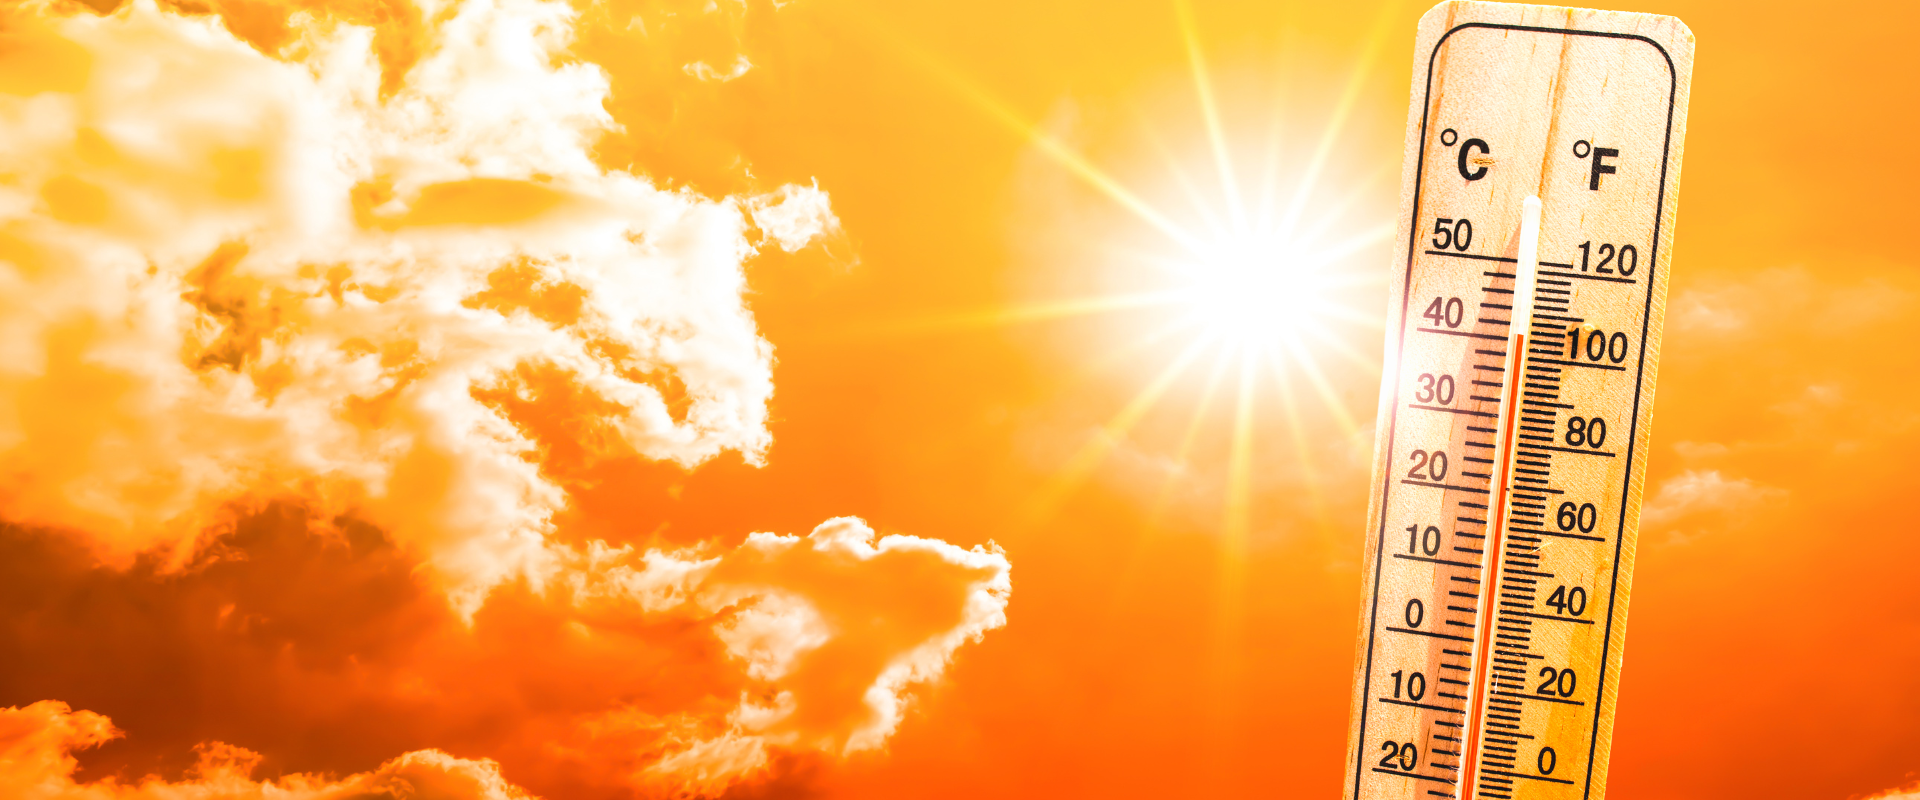 Heat wave: Record high air temperature registered in Bishkek on June 6-9